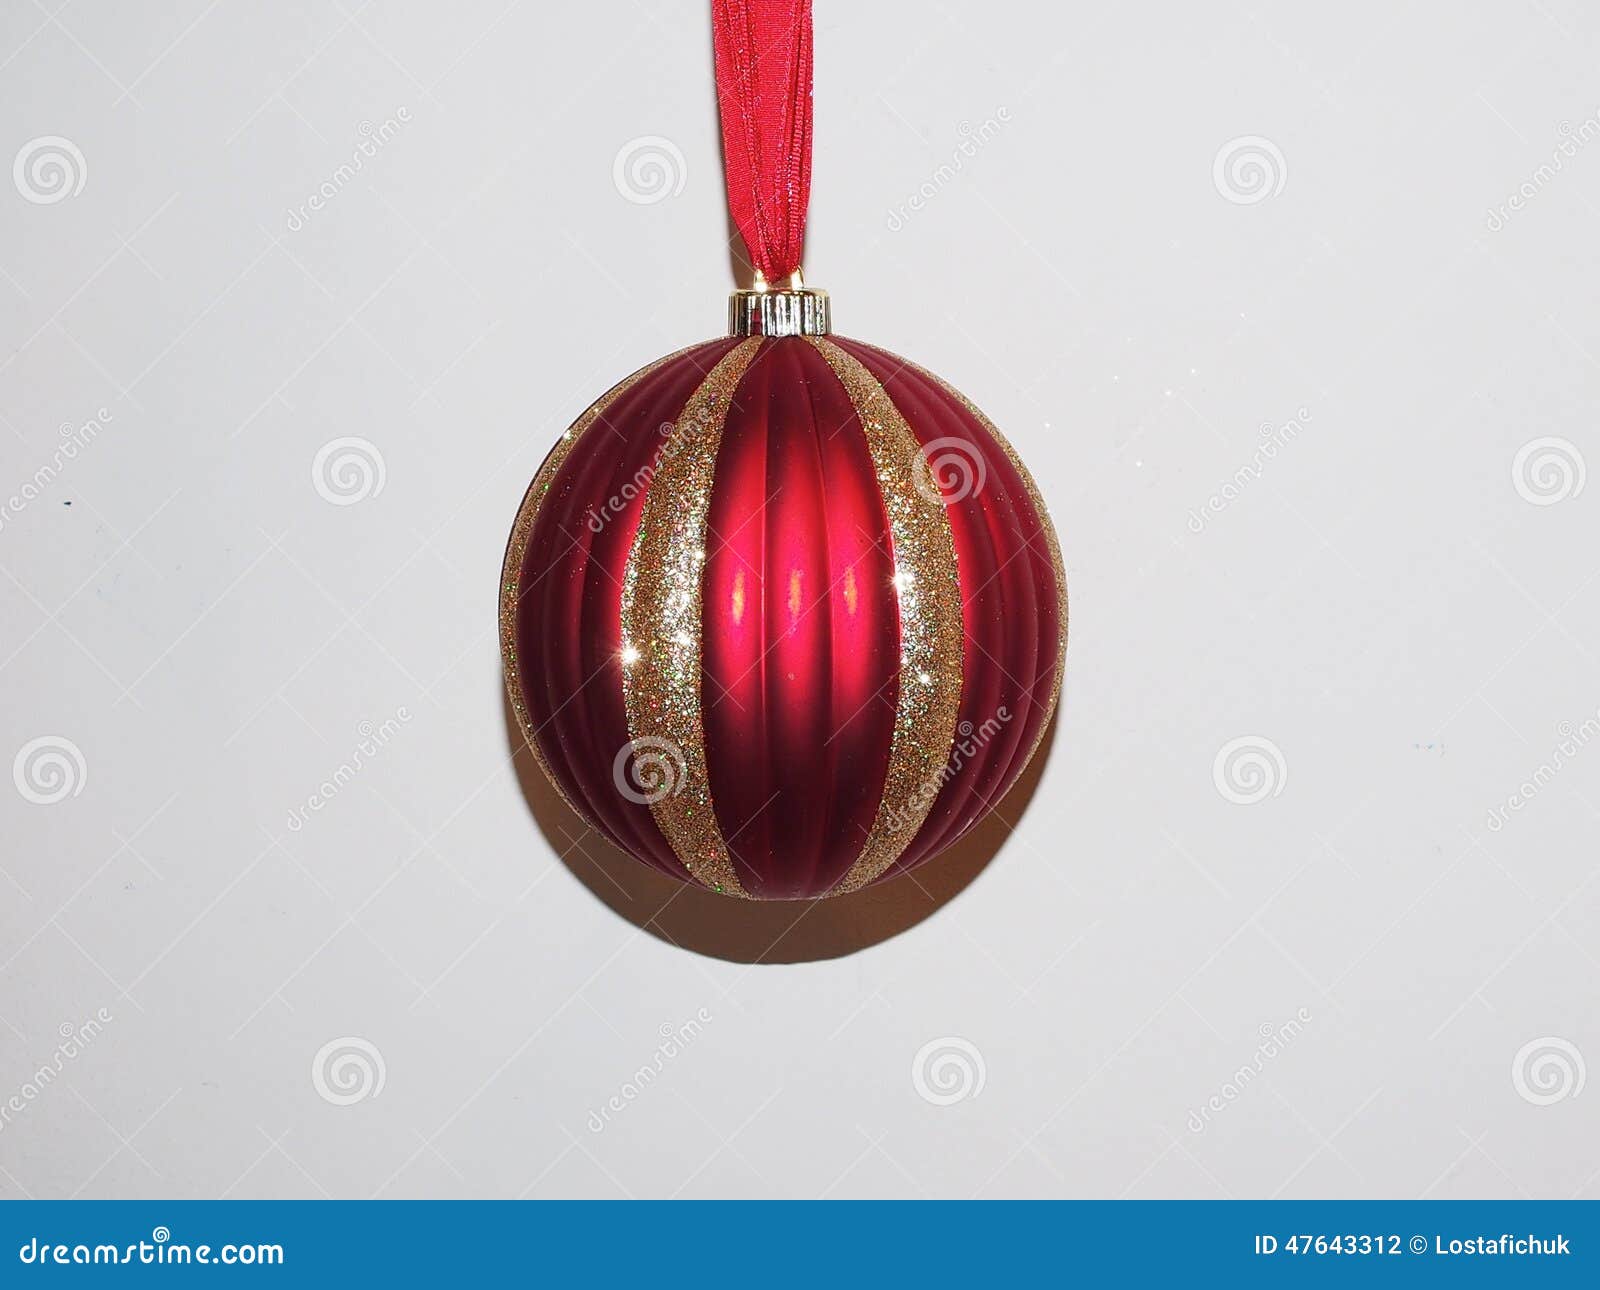 Christmas Ornament stock photo. Image of ornament, celeration - 47643312